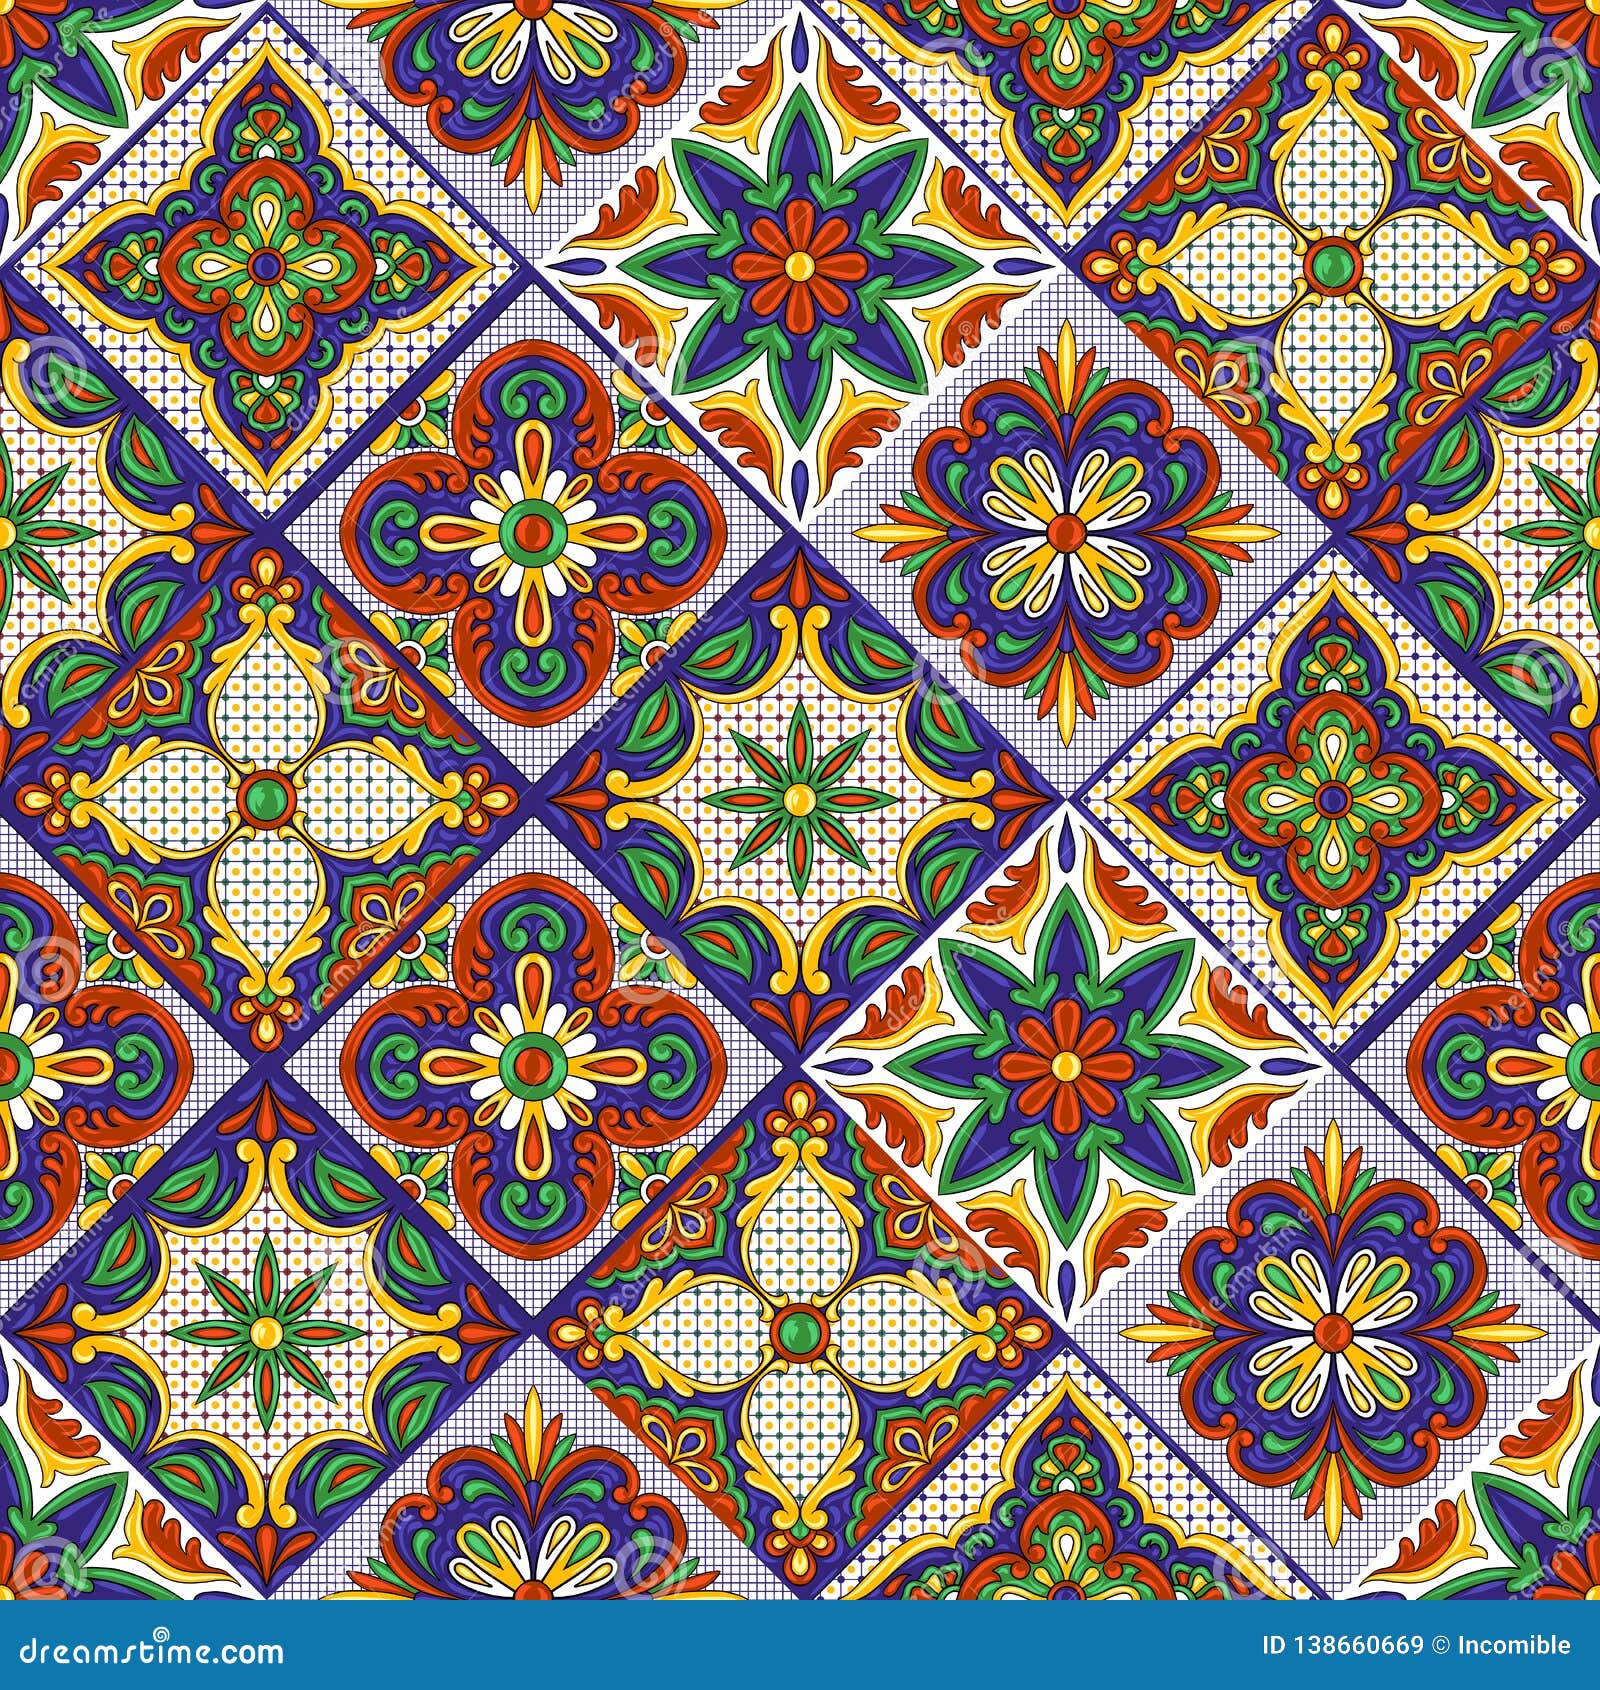 mexican talavera ceramic tile pattern. ethnic folk ornament.